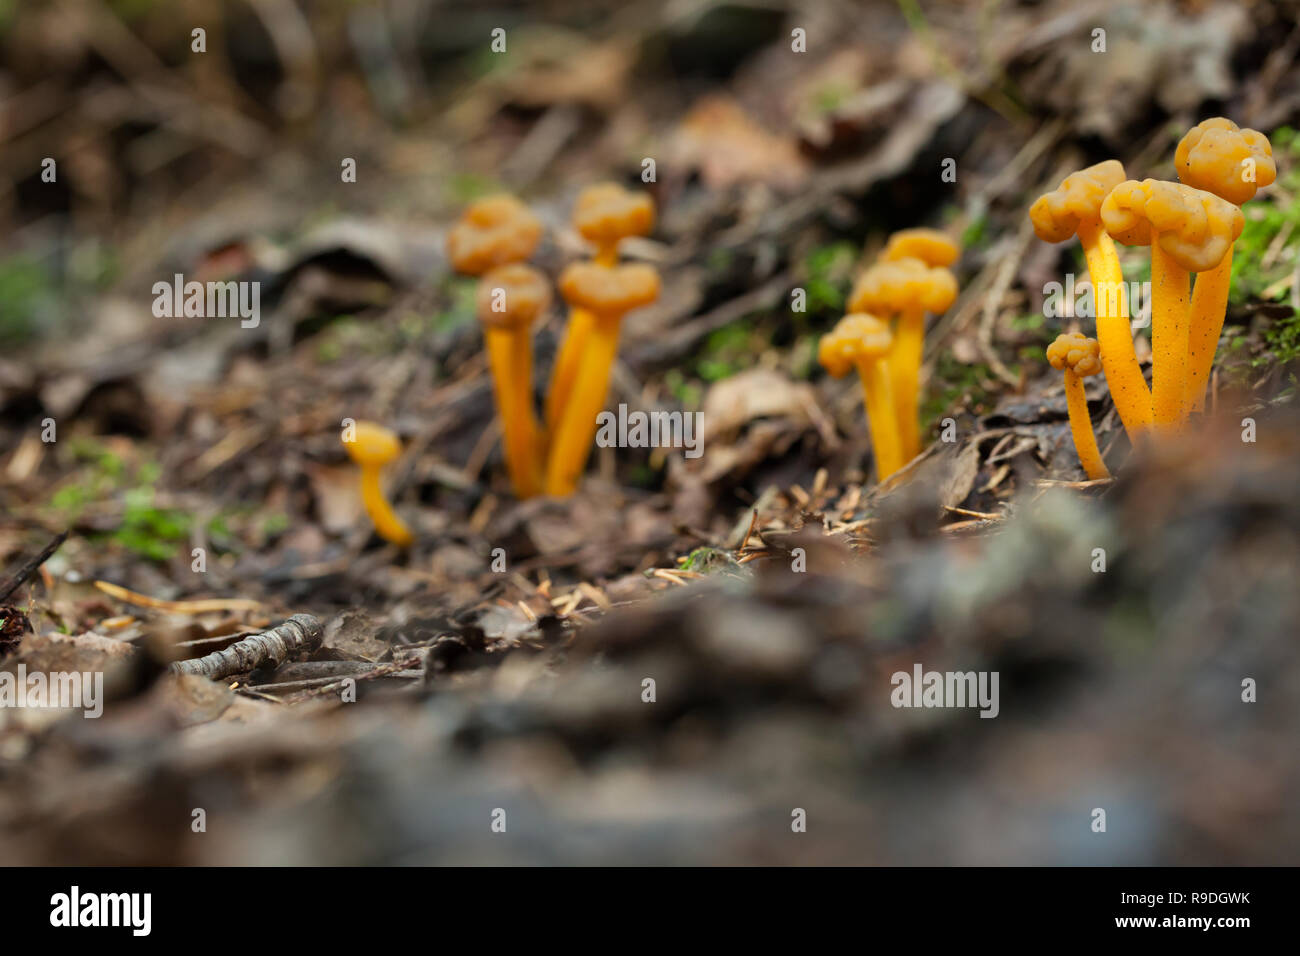 Jelly baby mushroom Stock Photo - Alamy